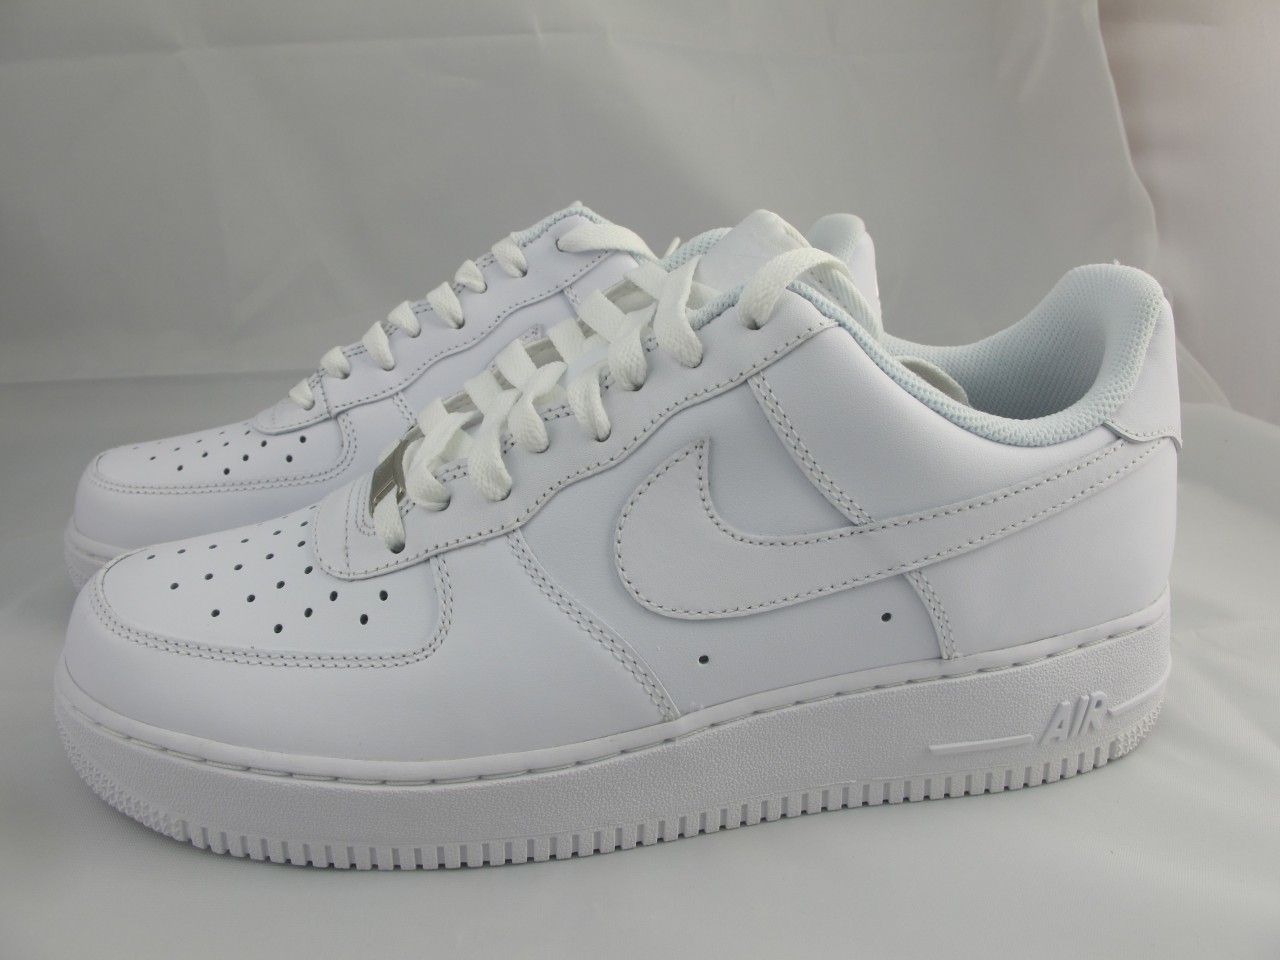 New Men's Nike Air Force 1 Low '07 315122 111 White | eBay